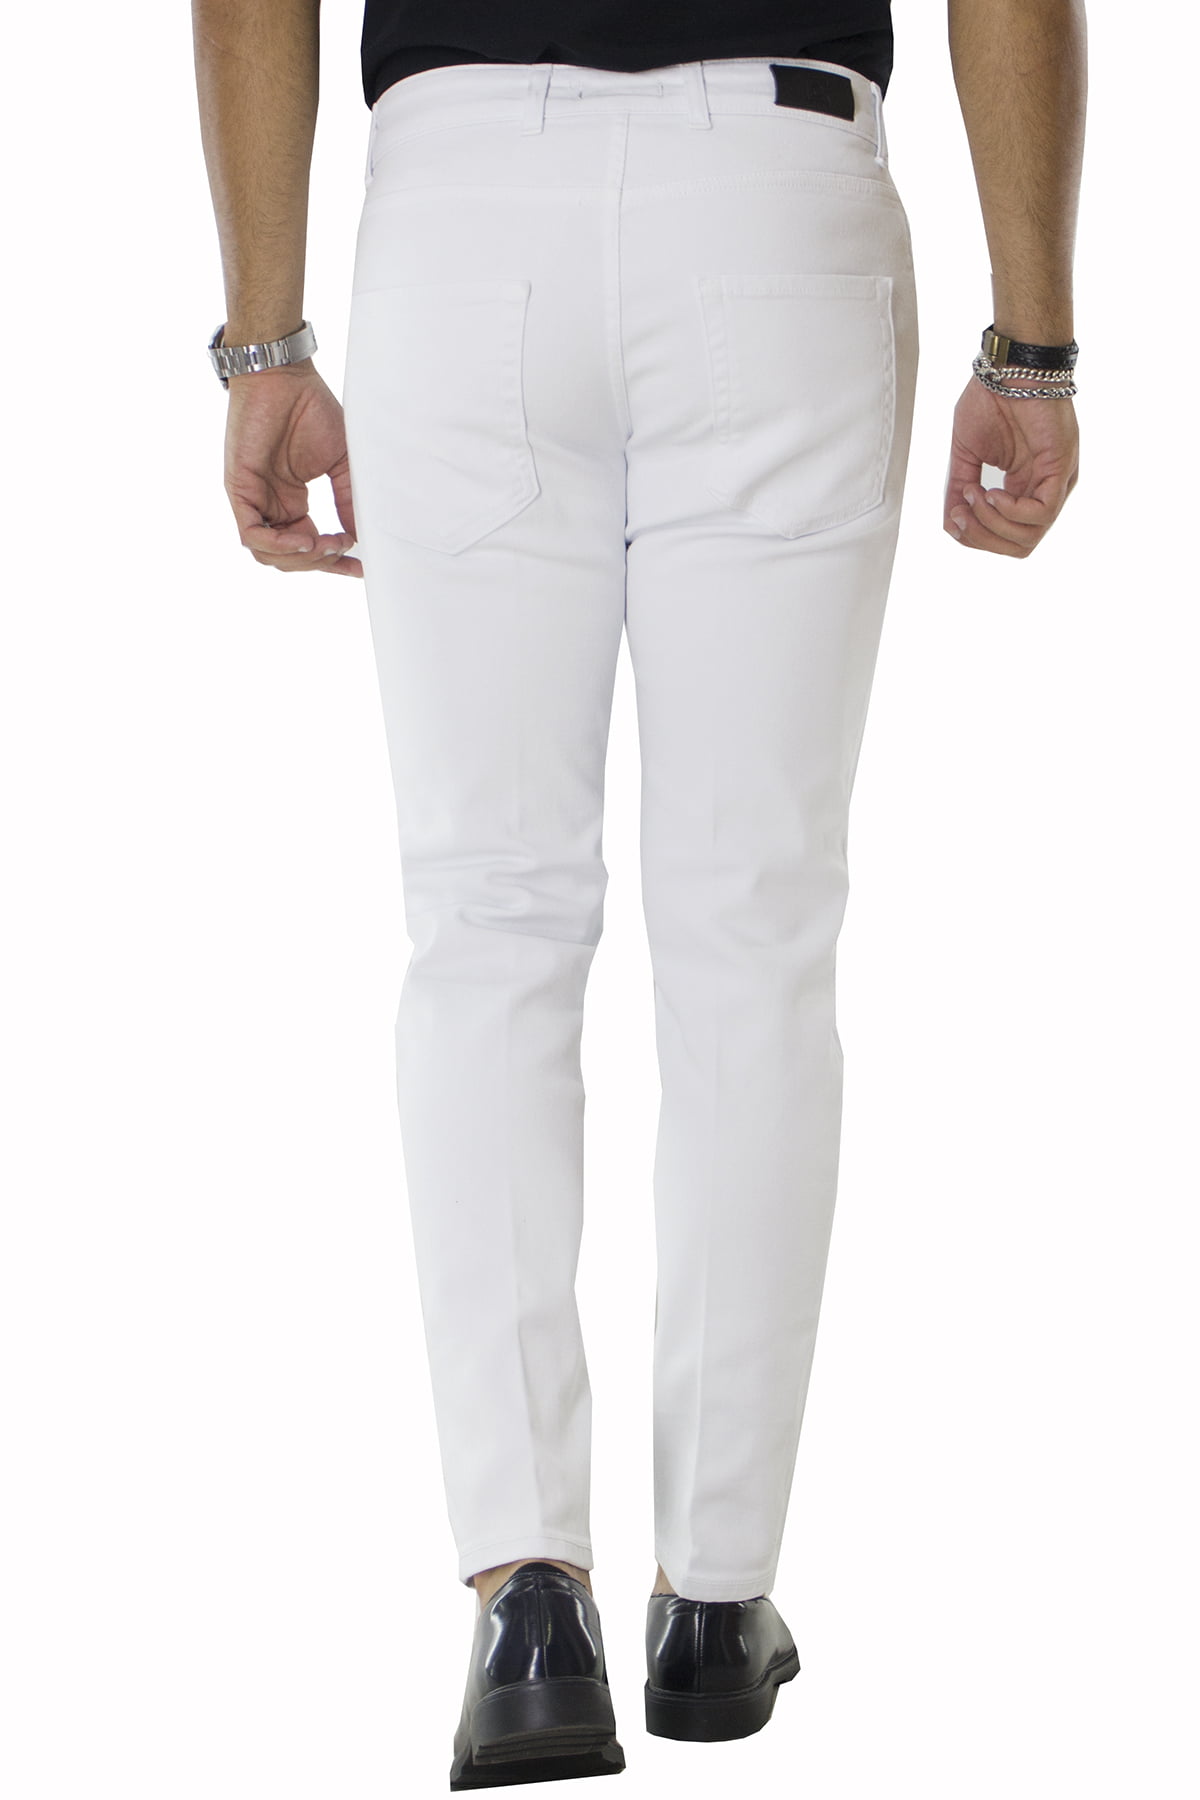 Jeans uomo bianco tinta unita modello 5 tasche slim fit made in italy